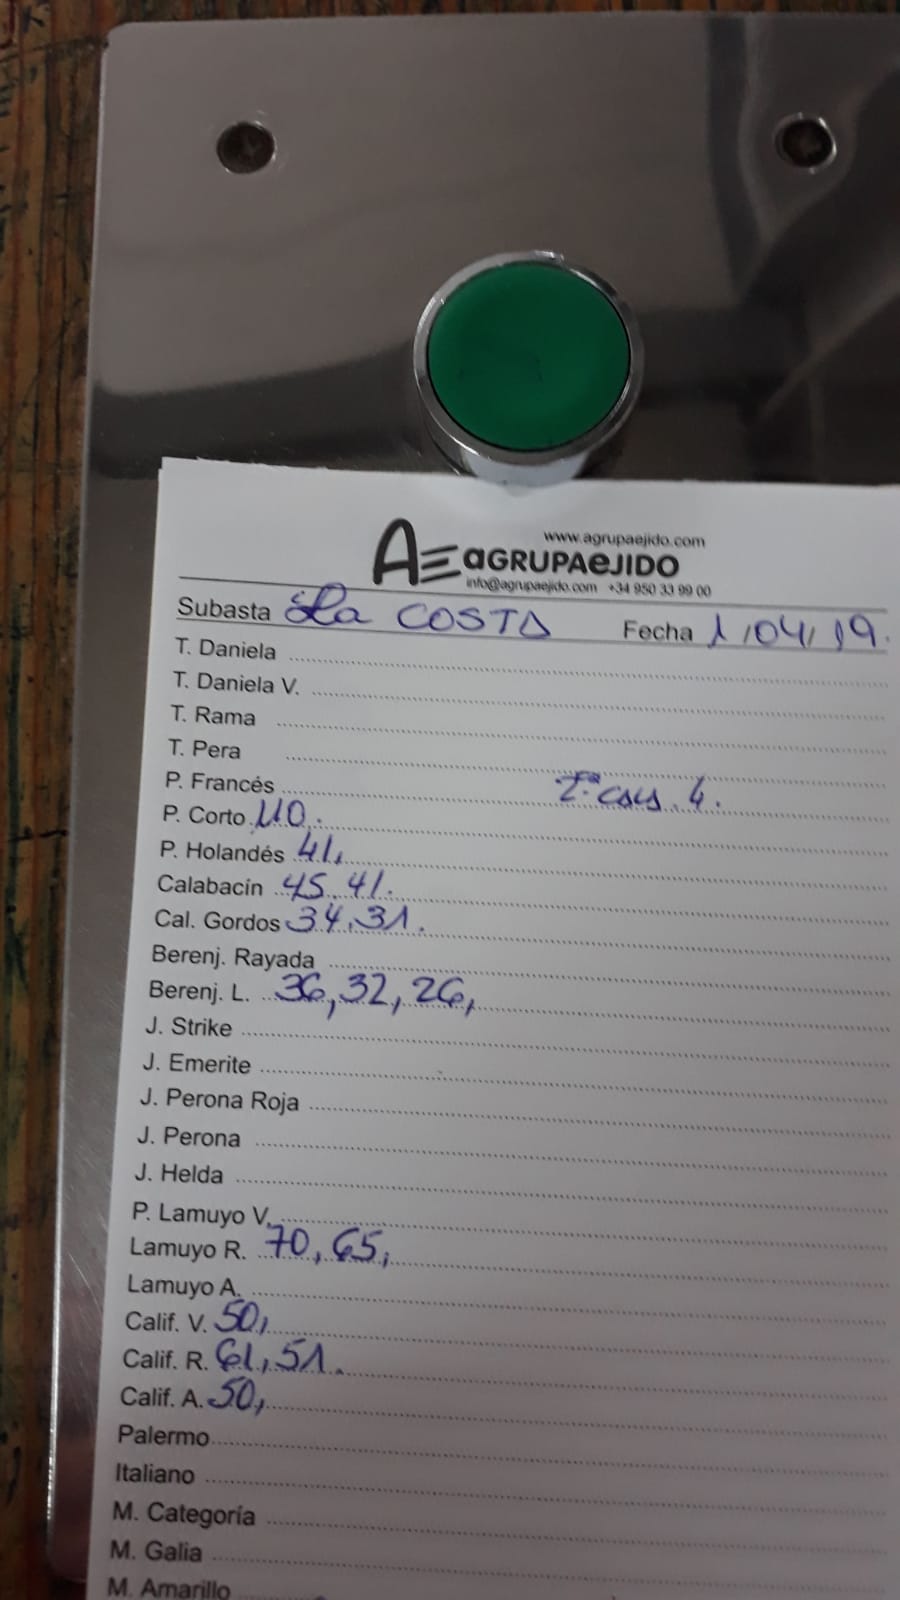 Subasta hortofrutícola AgrupaEjido La Redonda 1 de Abril 2019